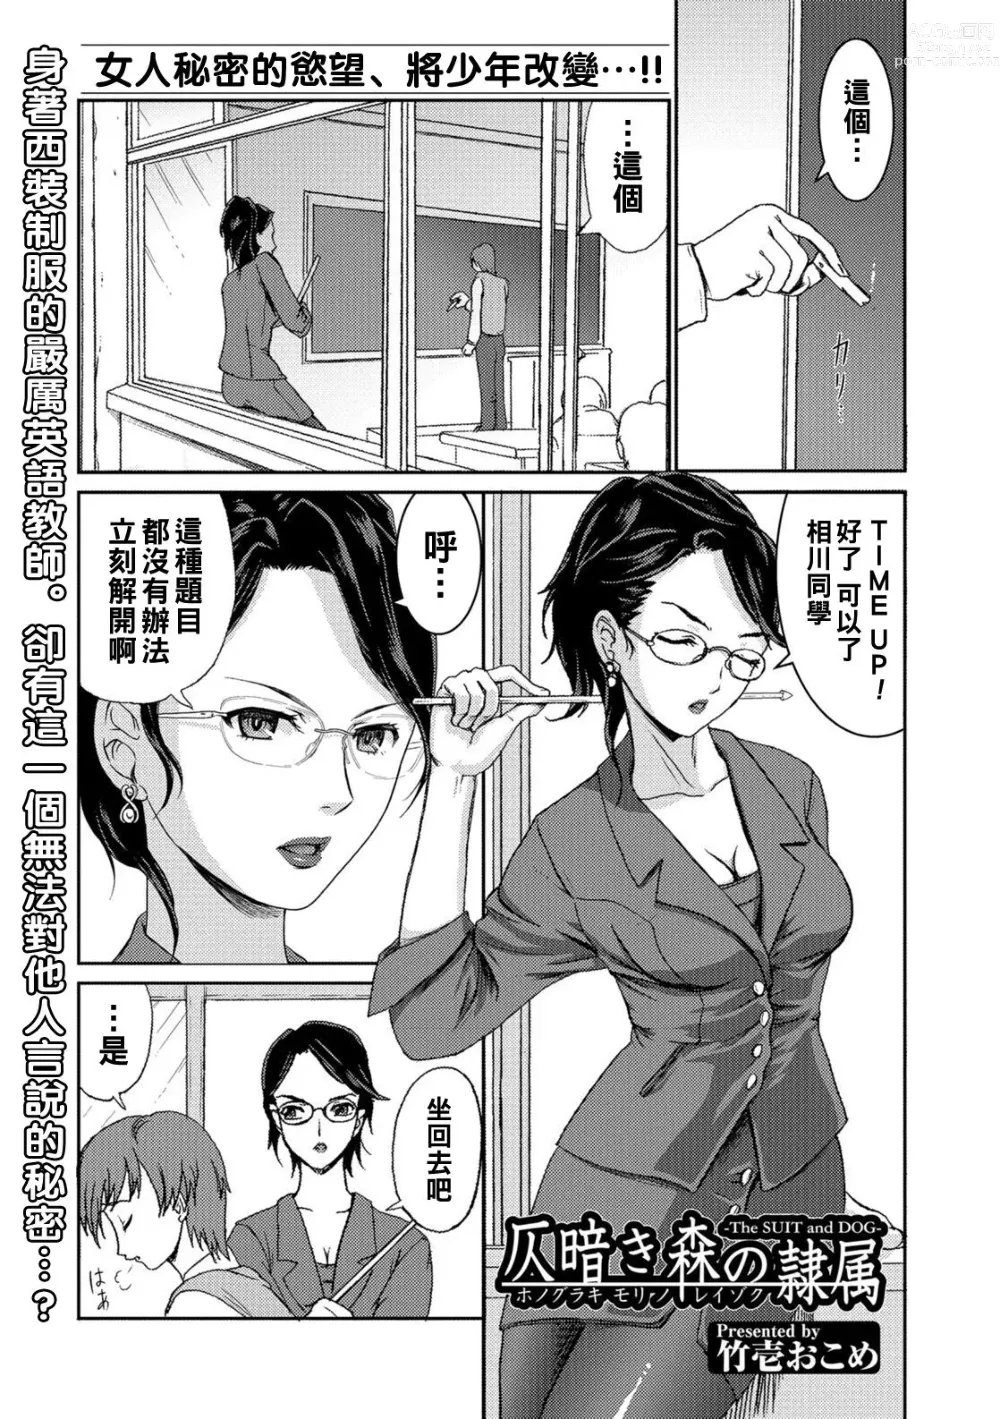 Page 1 of manga Honoguraki Mori no Reizoku -The SUIT and DOG-